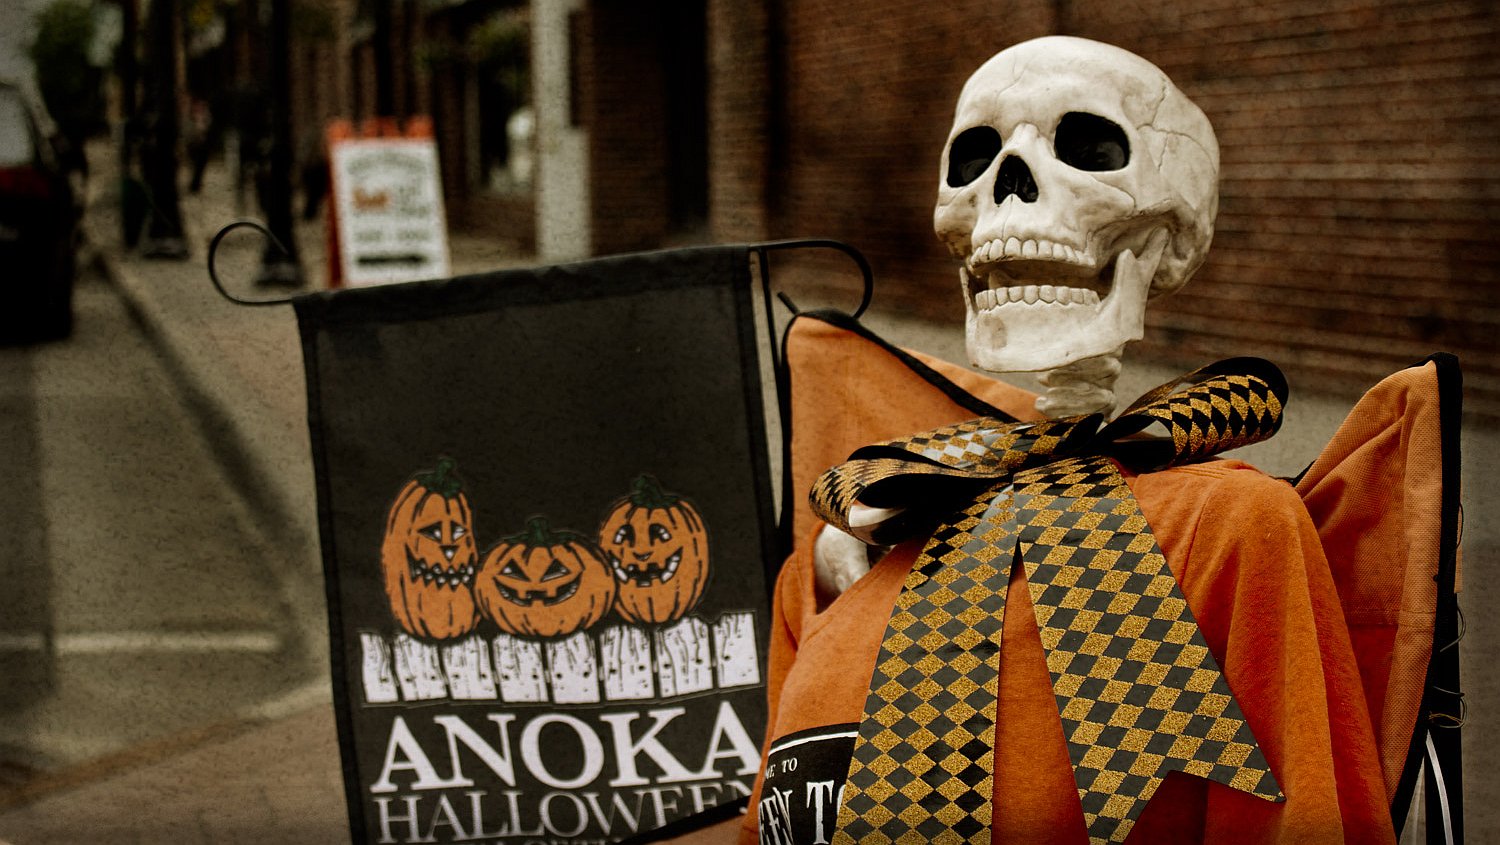 EventPhotos/Halloween/Anoka Halloween Skeleton.jpg